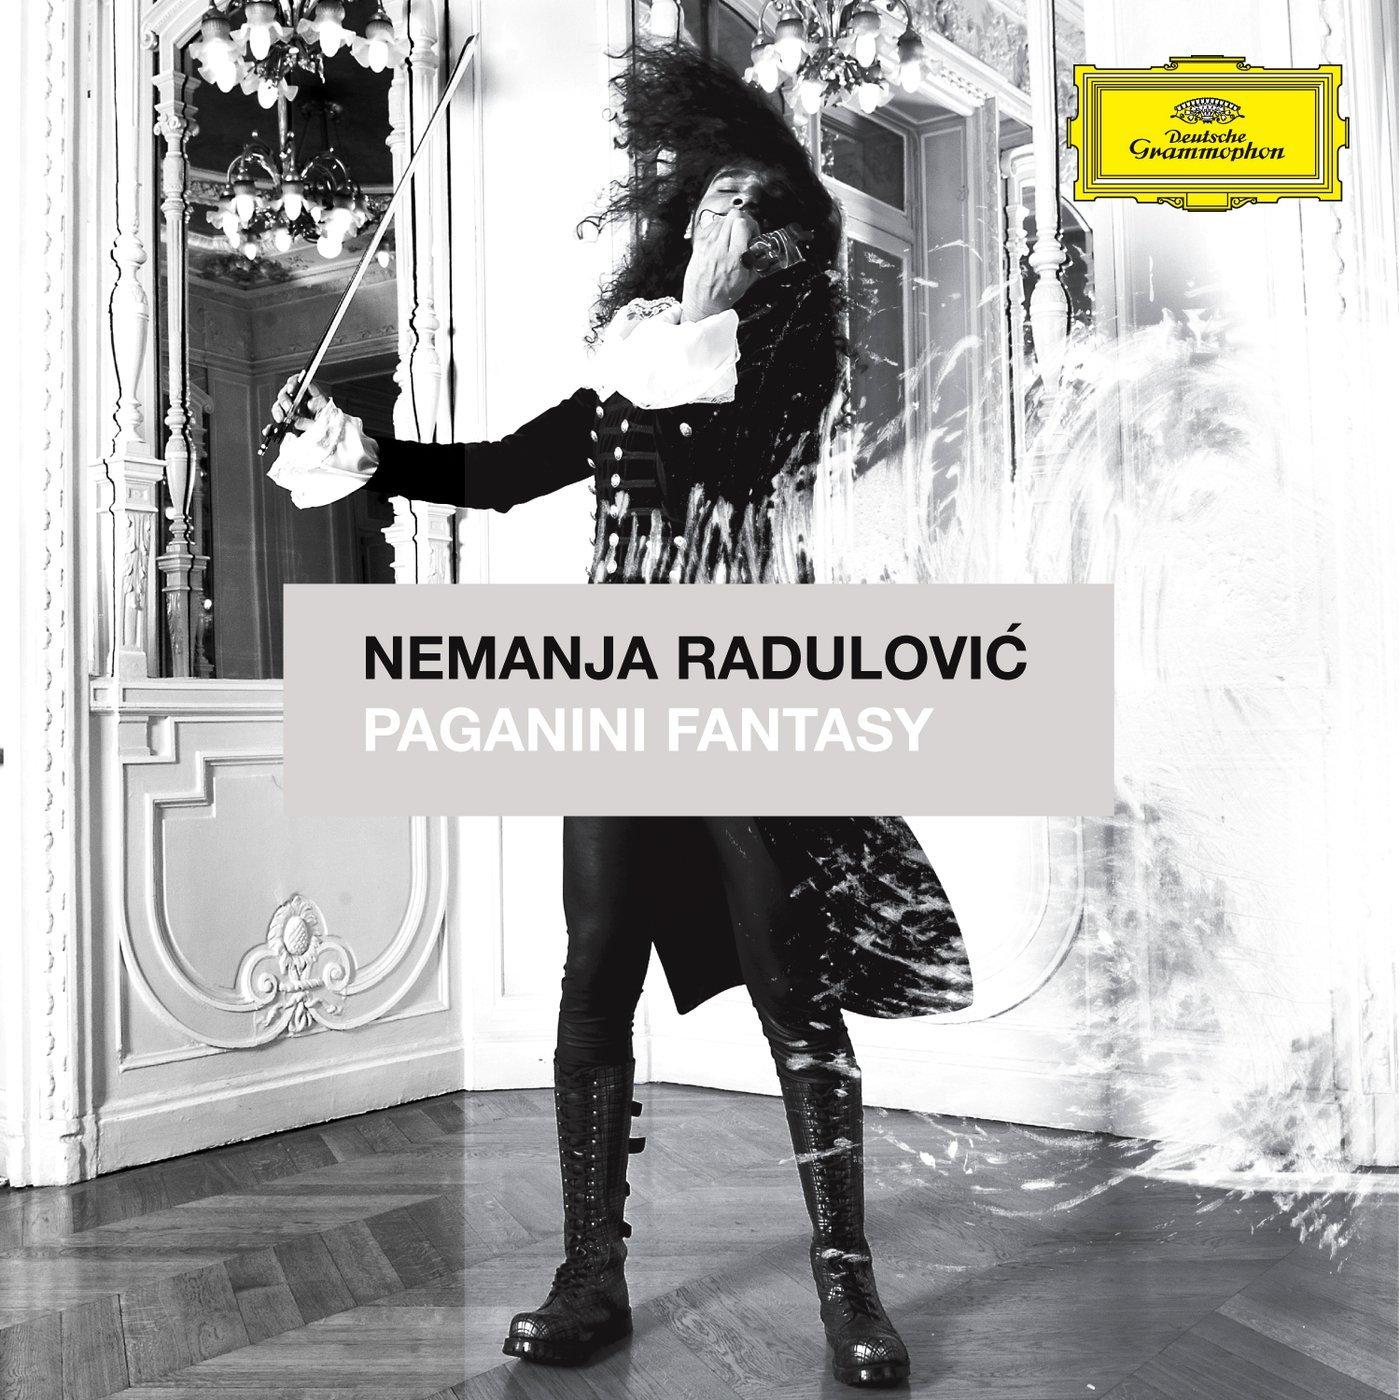 Le concerto pour violon de Paganini. L´expérience Nemanja Radulovic.